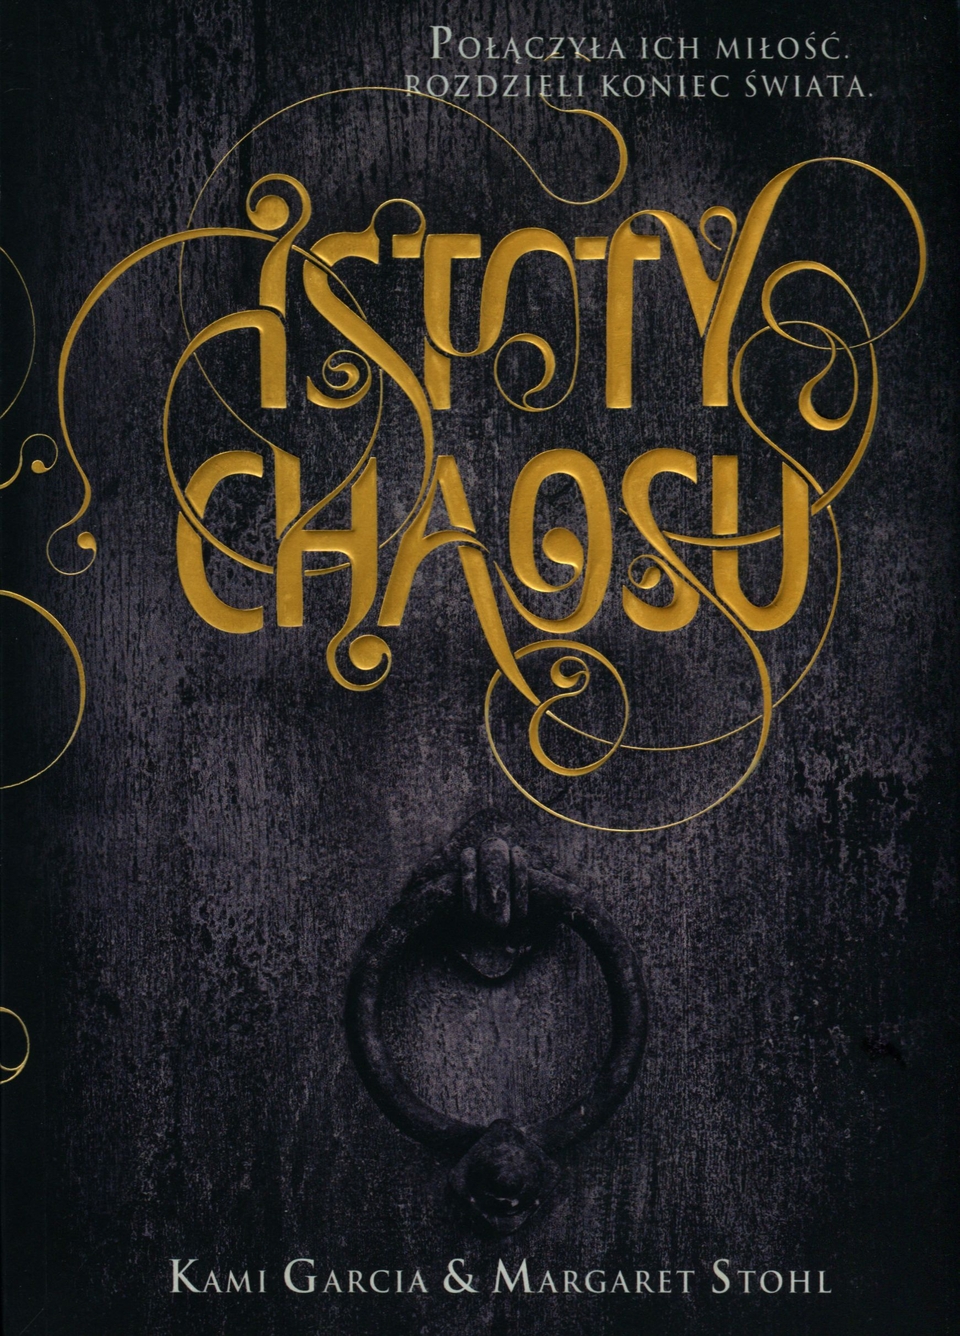 Istoty Chaosu